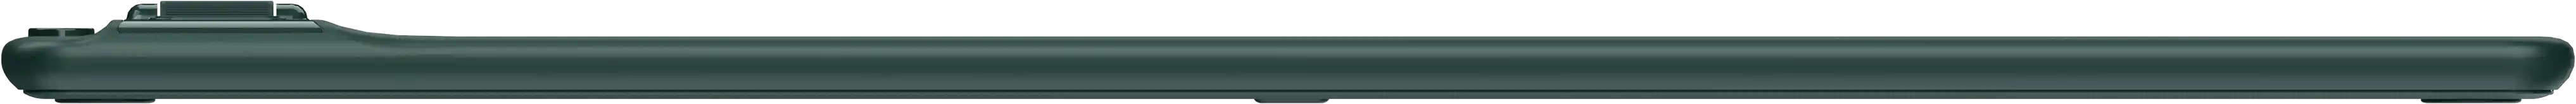 Графический планшет HUION Inspiroy 2 M H951P Green (H951P Green)